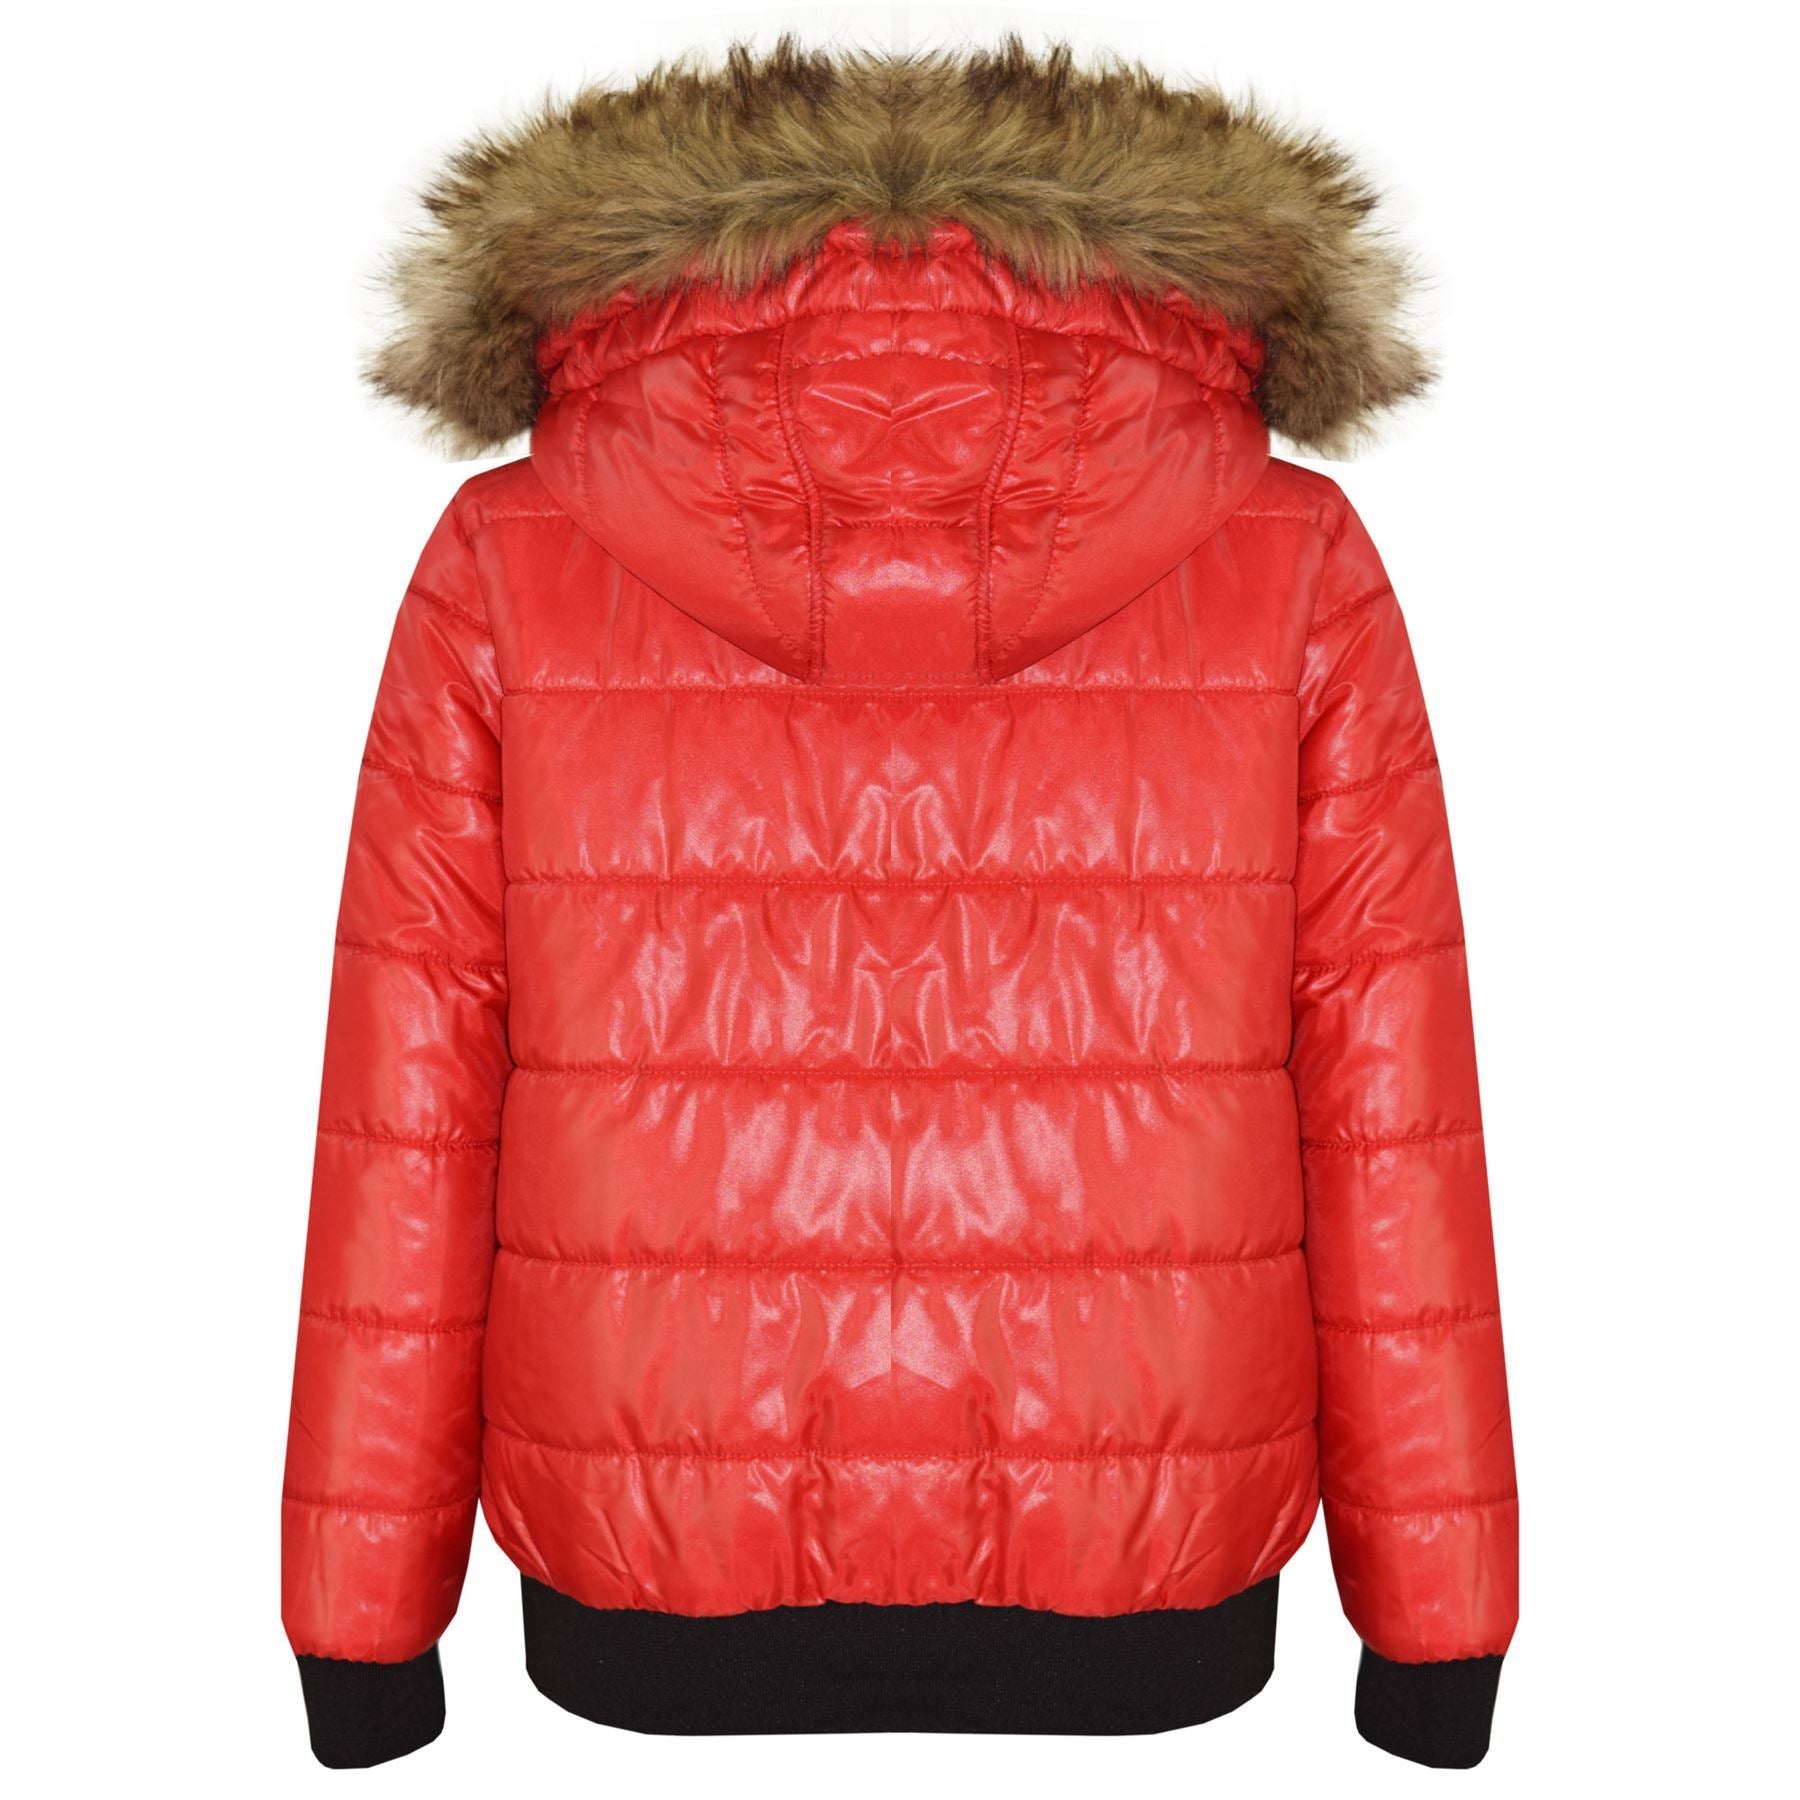 Kids Girls Boys Fux Fur Red Hooded Puffer Jacket